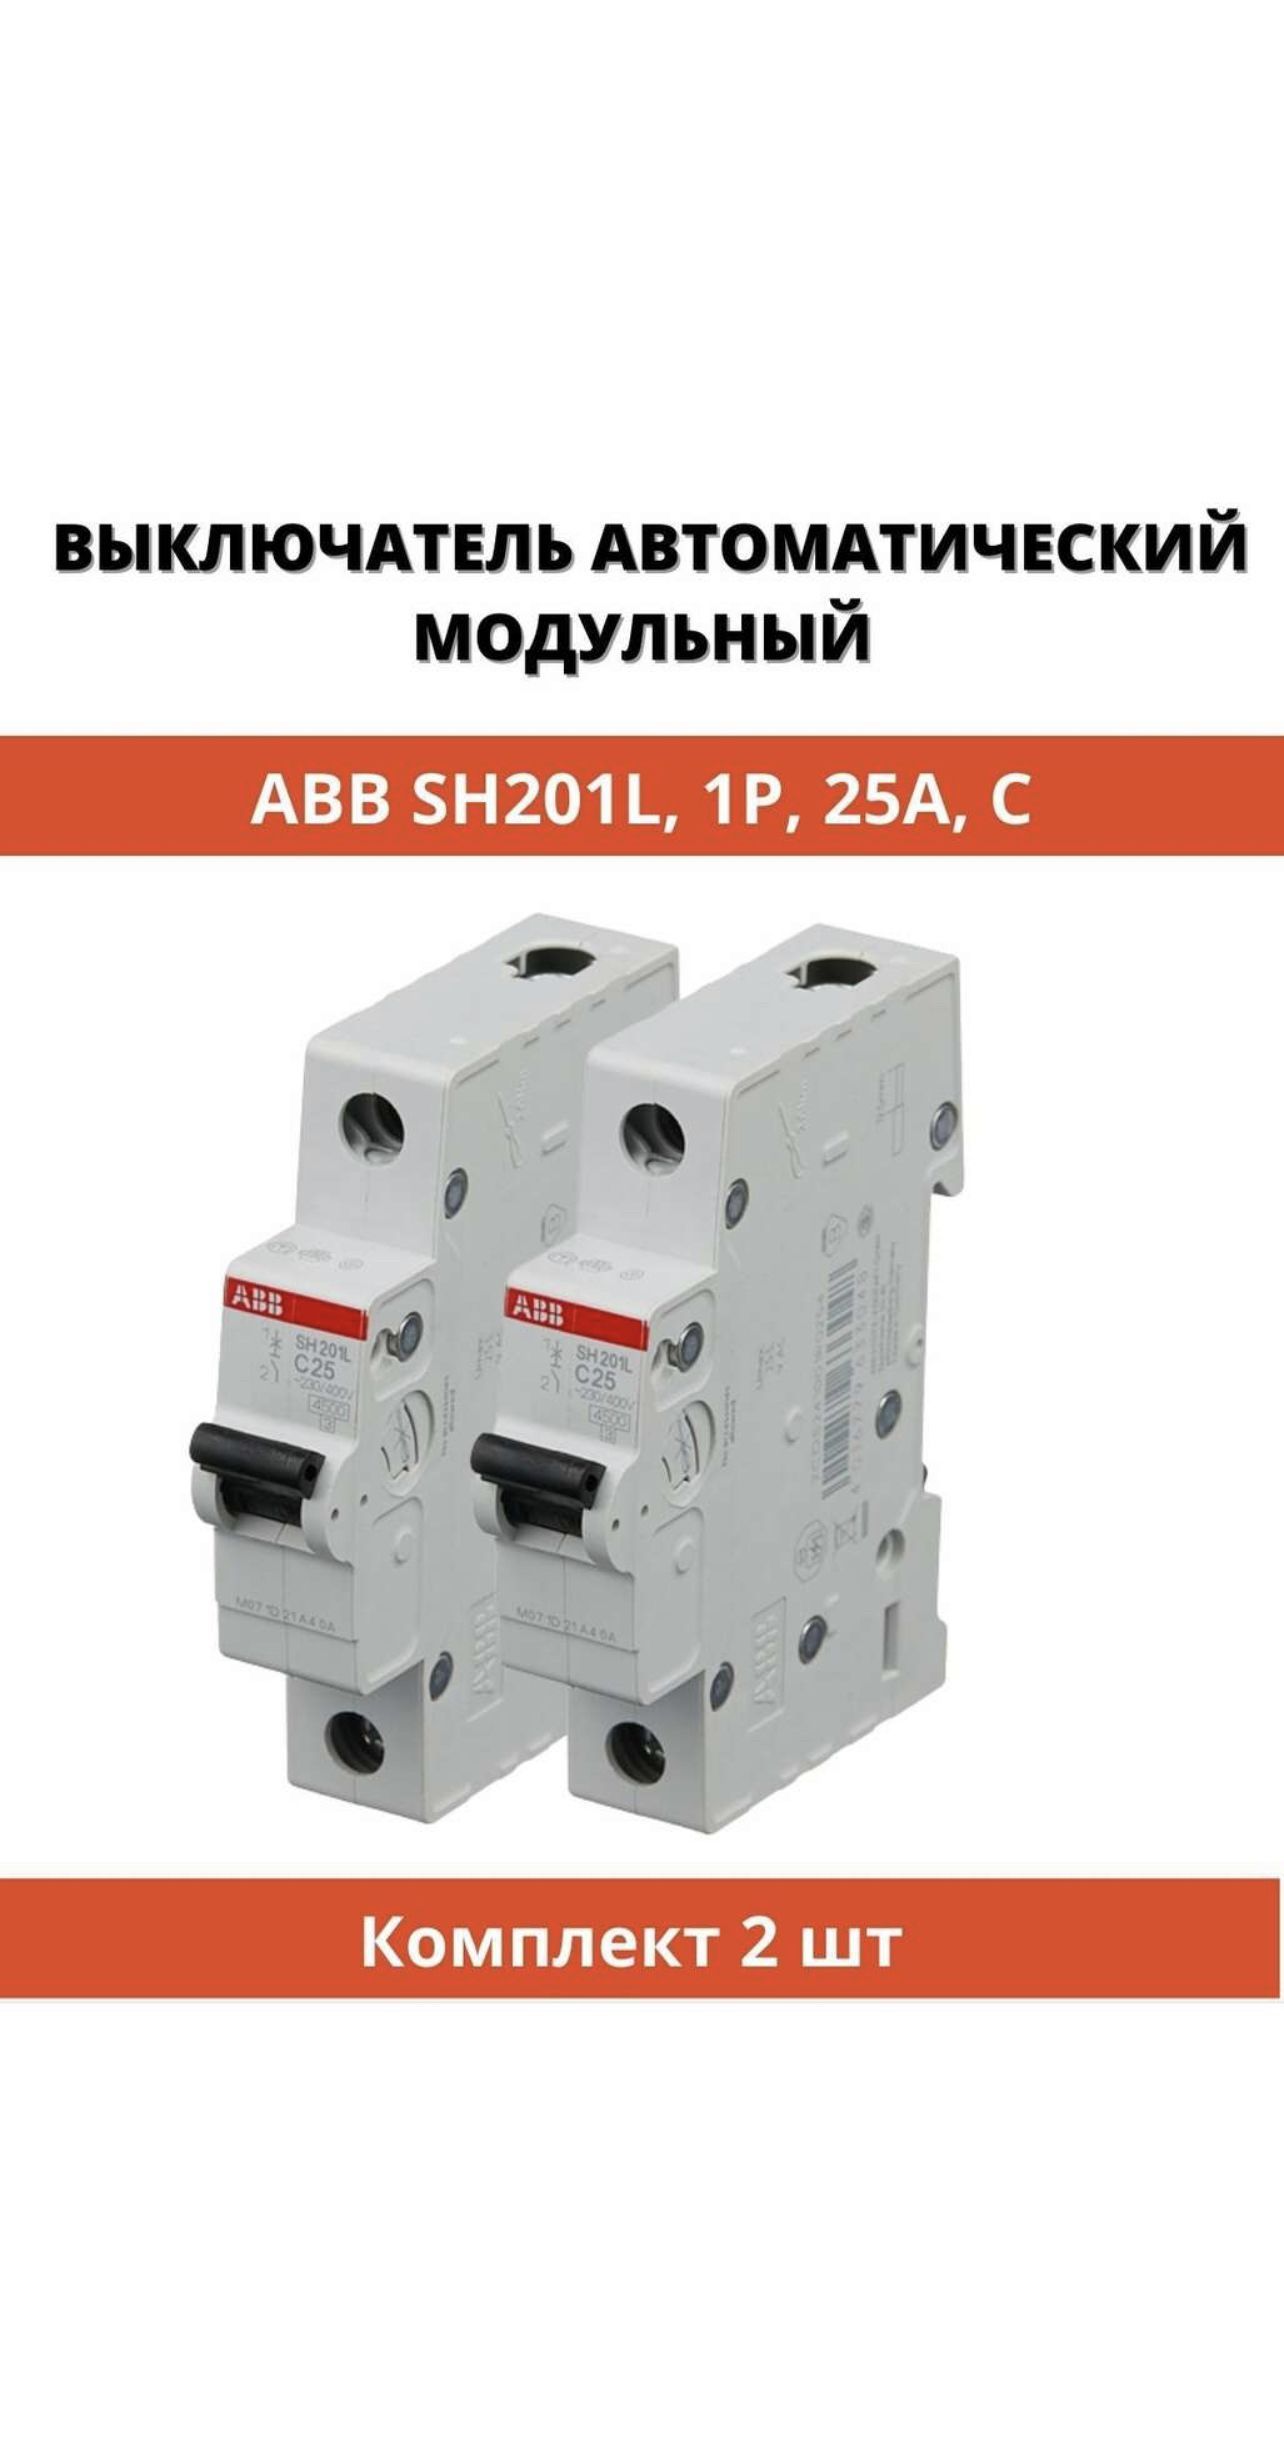 Автоматический выключатель abb 1. Автоматический модульный выключатель ABB 2п c sh202l 4.5ка 50а. Автомат ABB sh204 c63. АВВ sh201l c25. ABB sh200 25а.